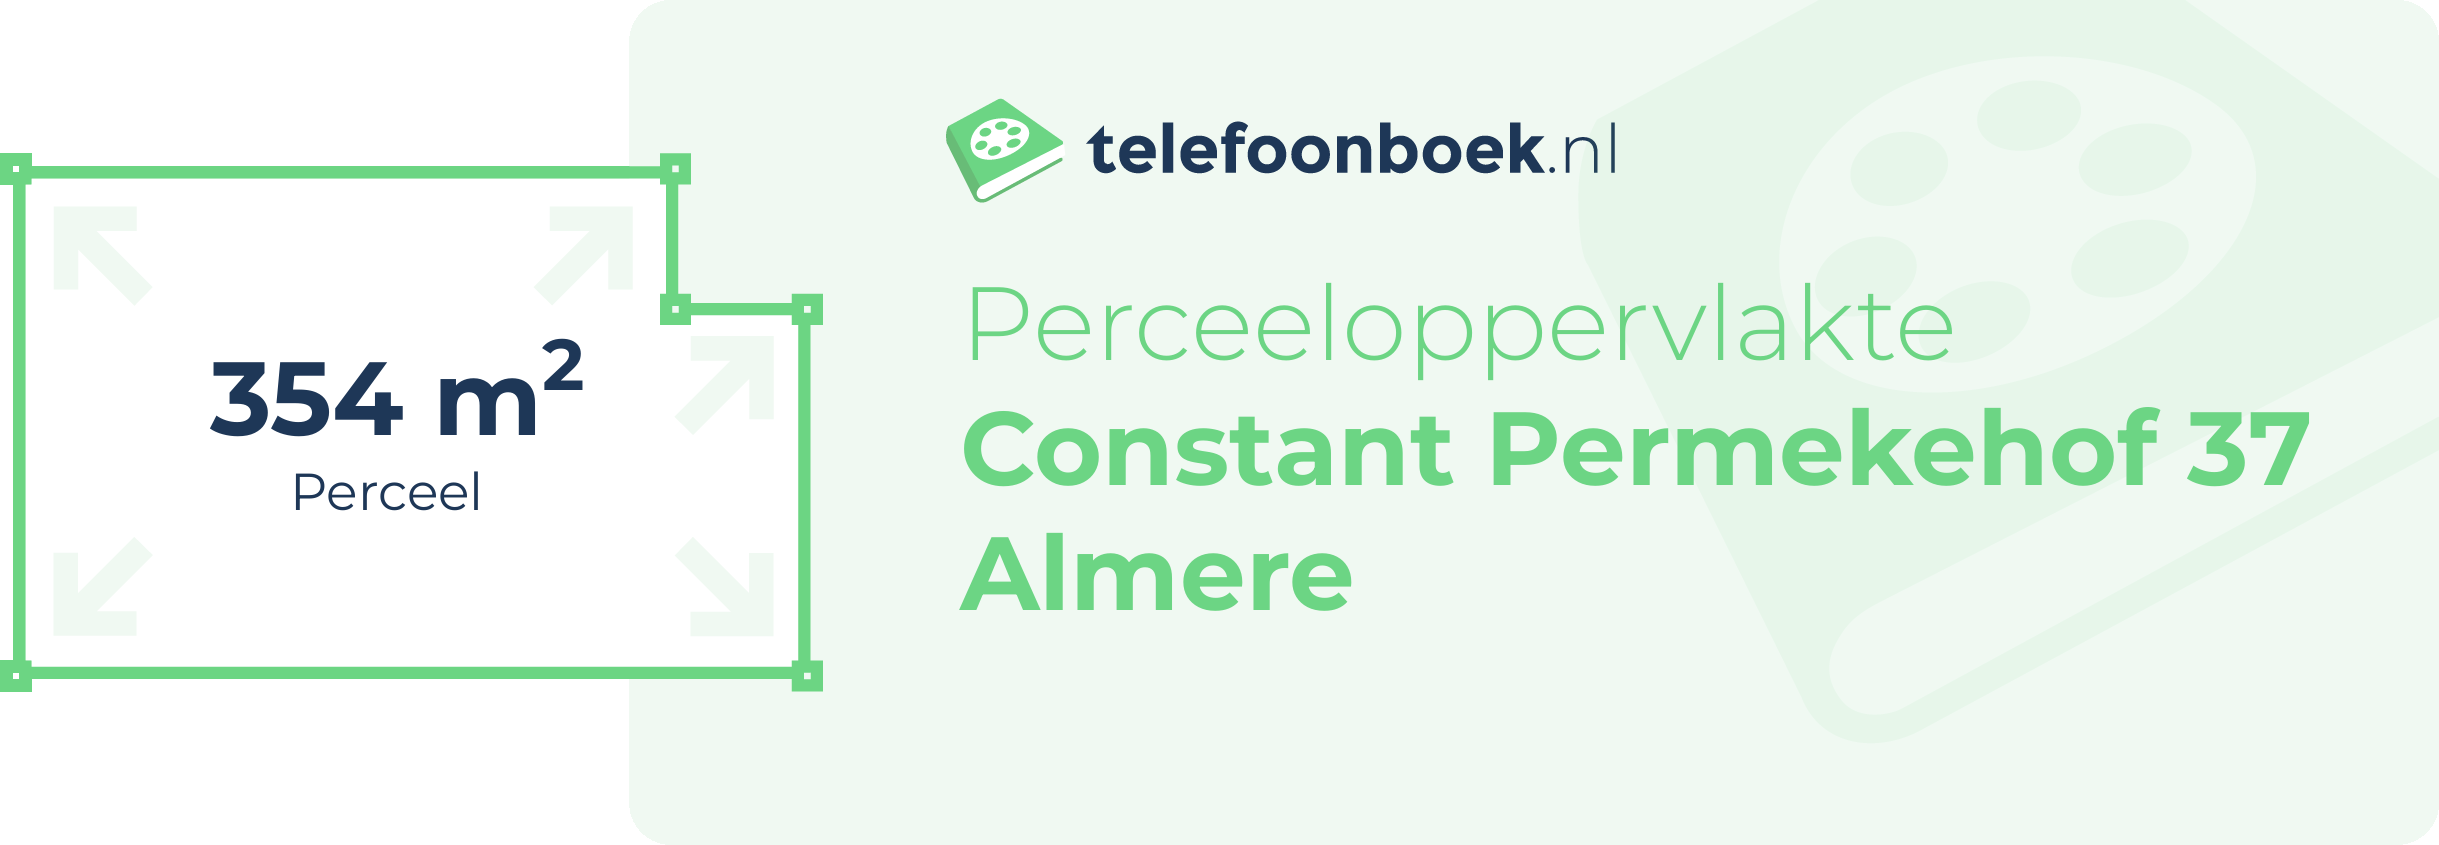 Perceeloppervlakte Constant Permekehof 37 Almere